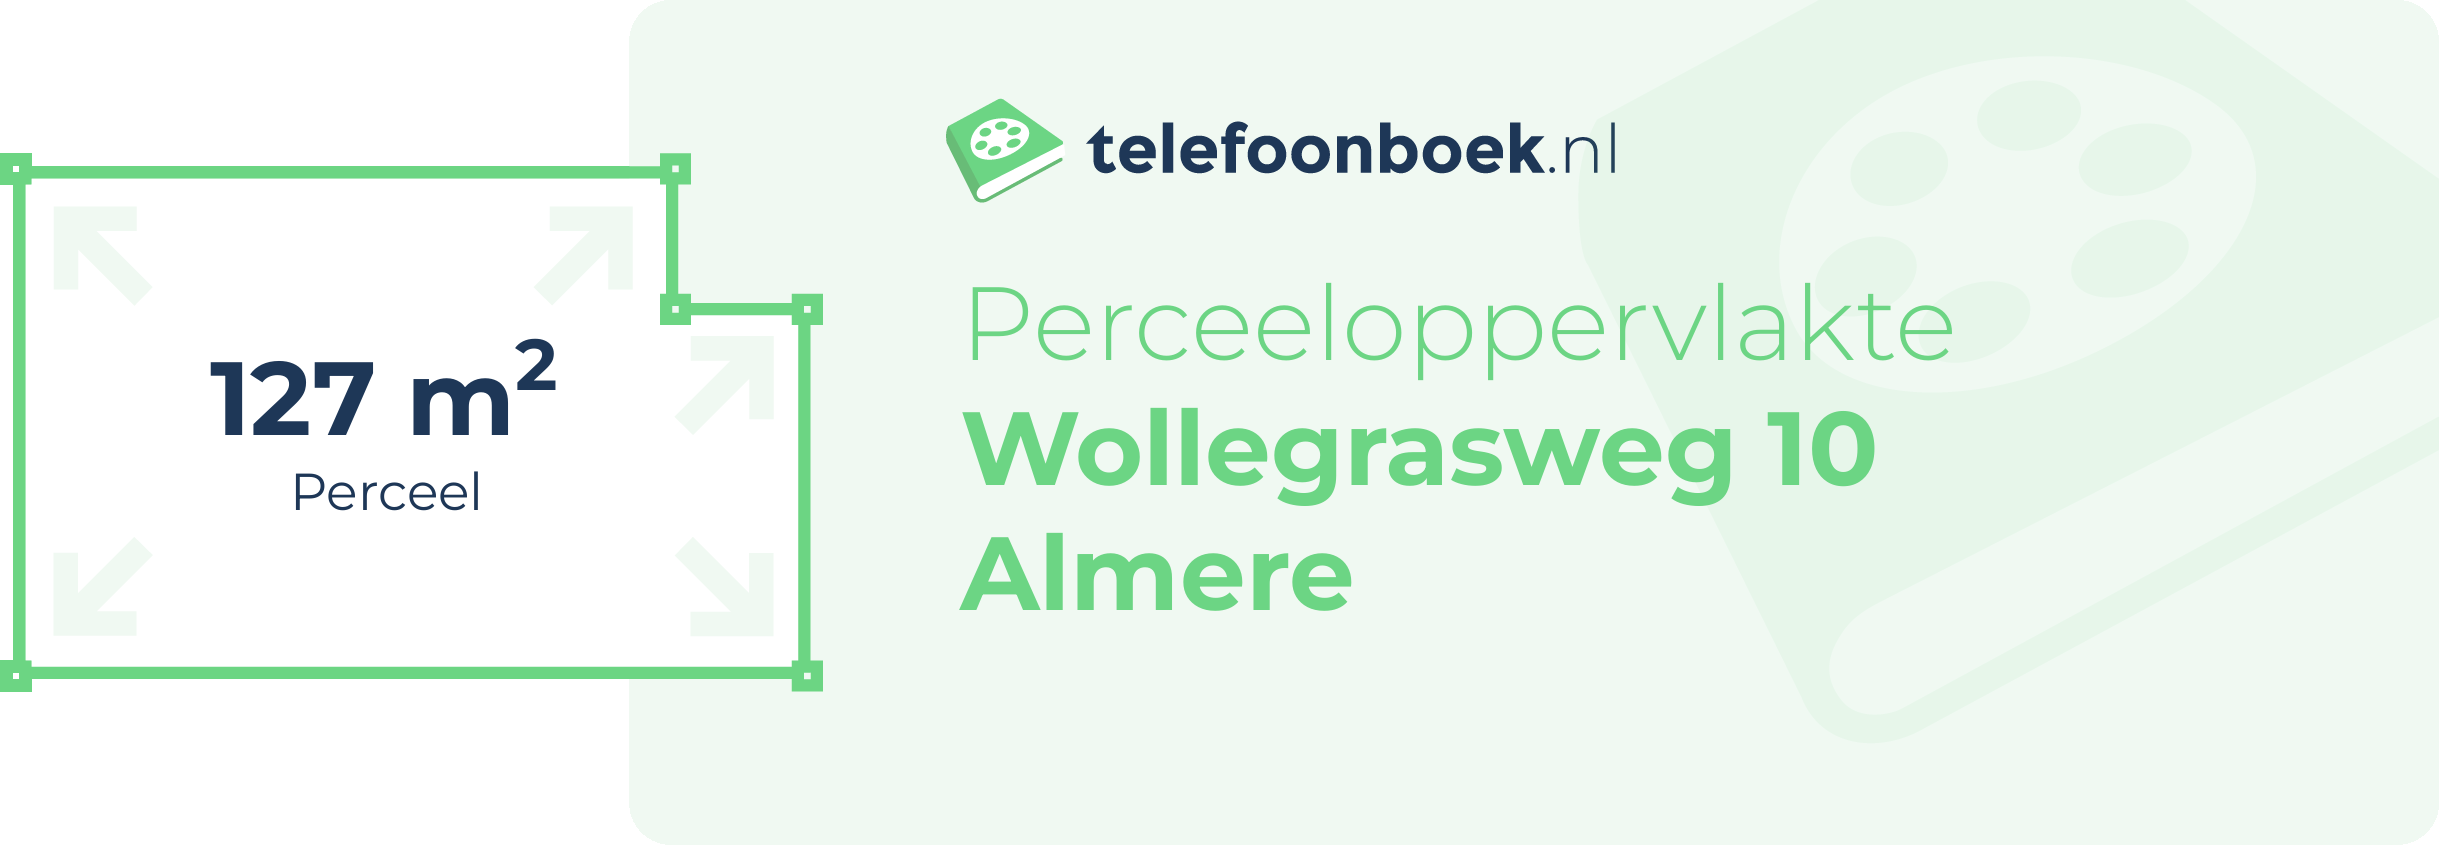 Perceeloppervlakte Wollegrasweg 10 Almere